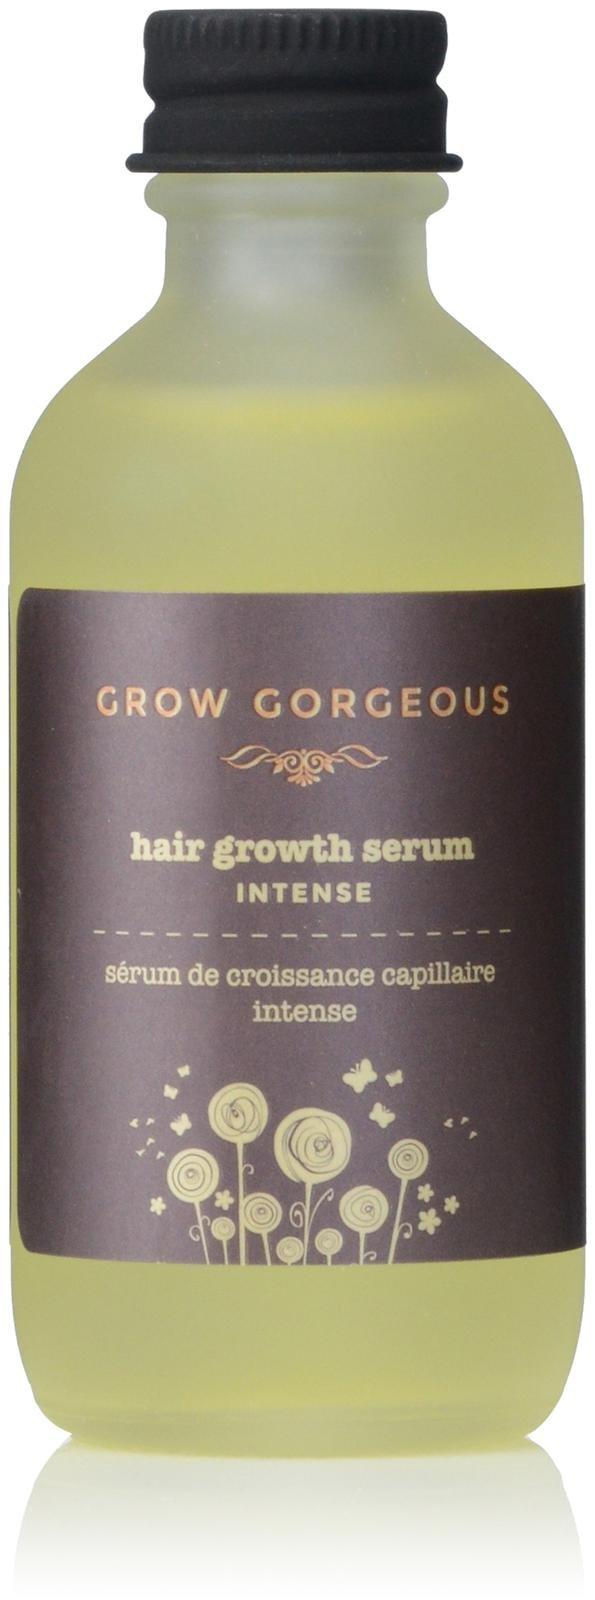 Grow Gorgeous Hair Growth Serum Intense - 2 Oz